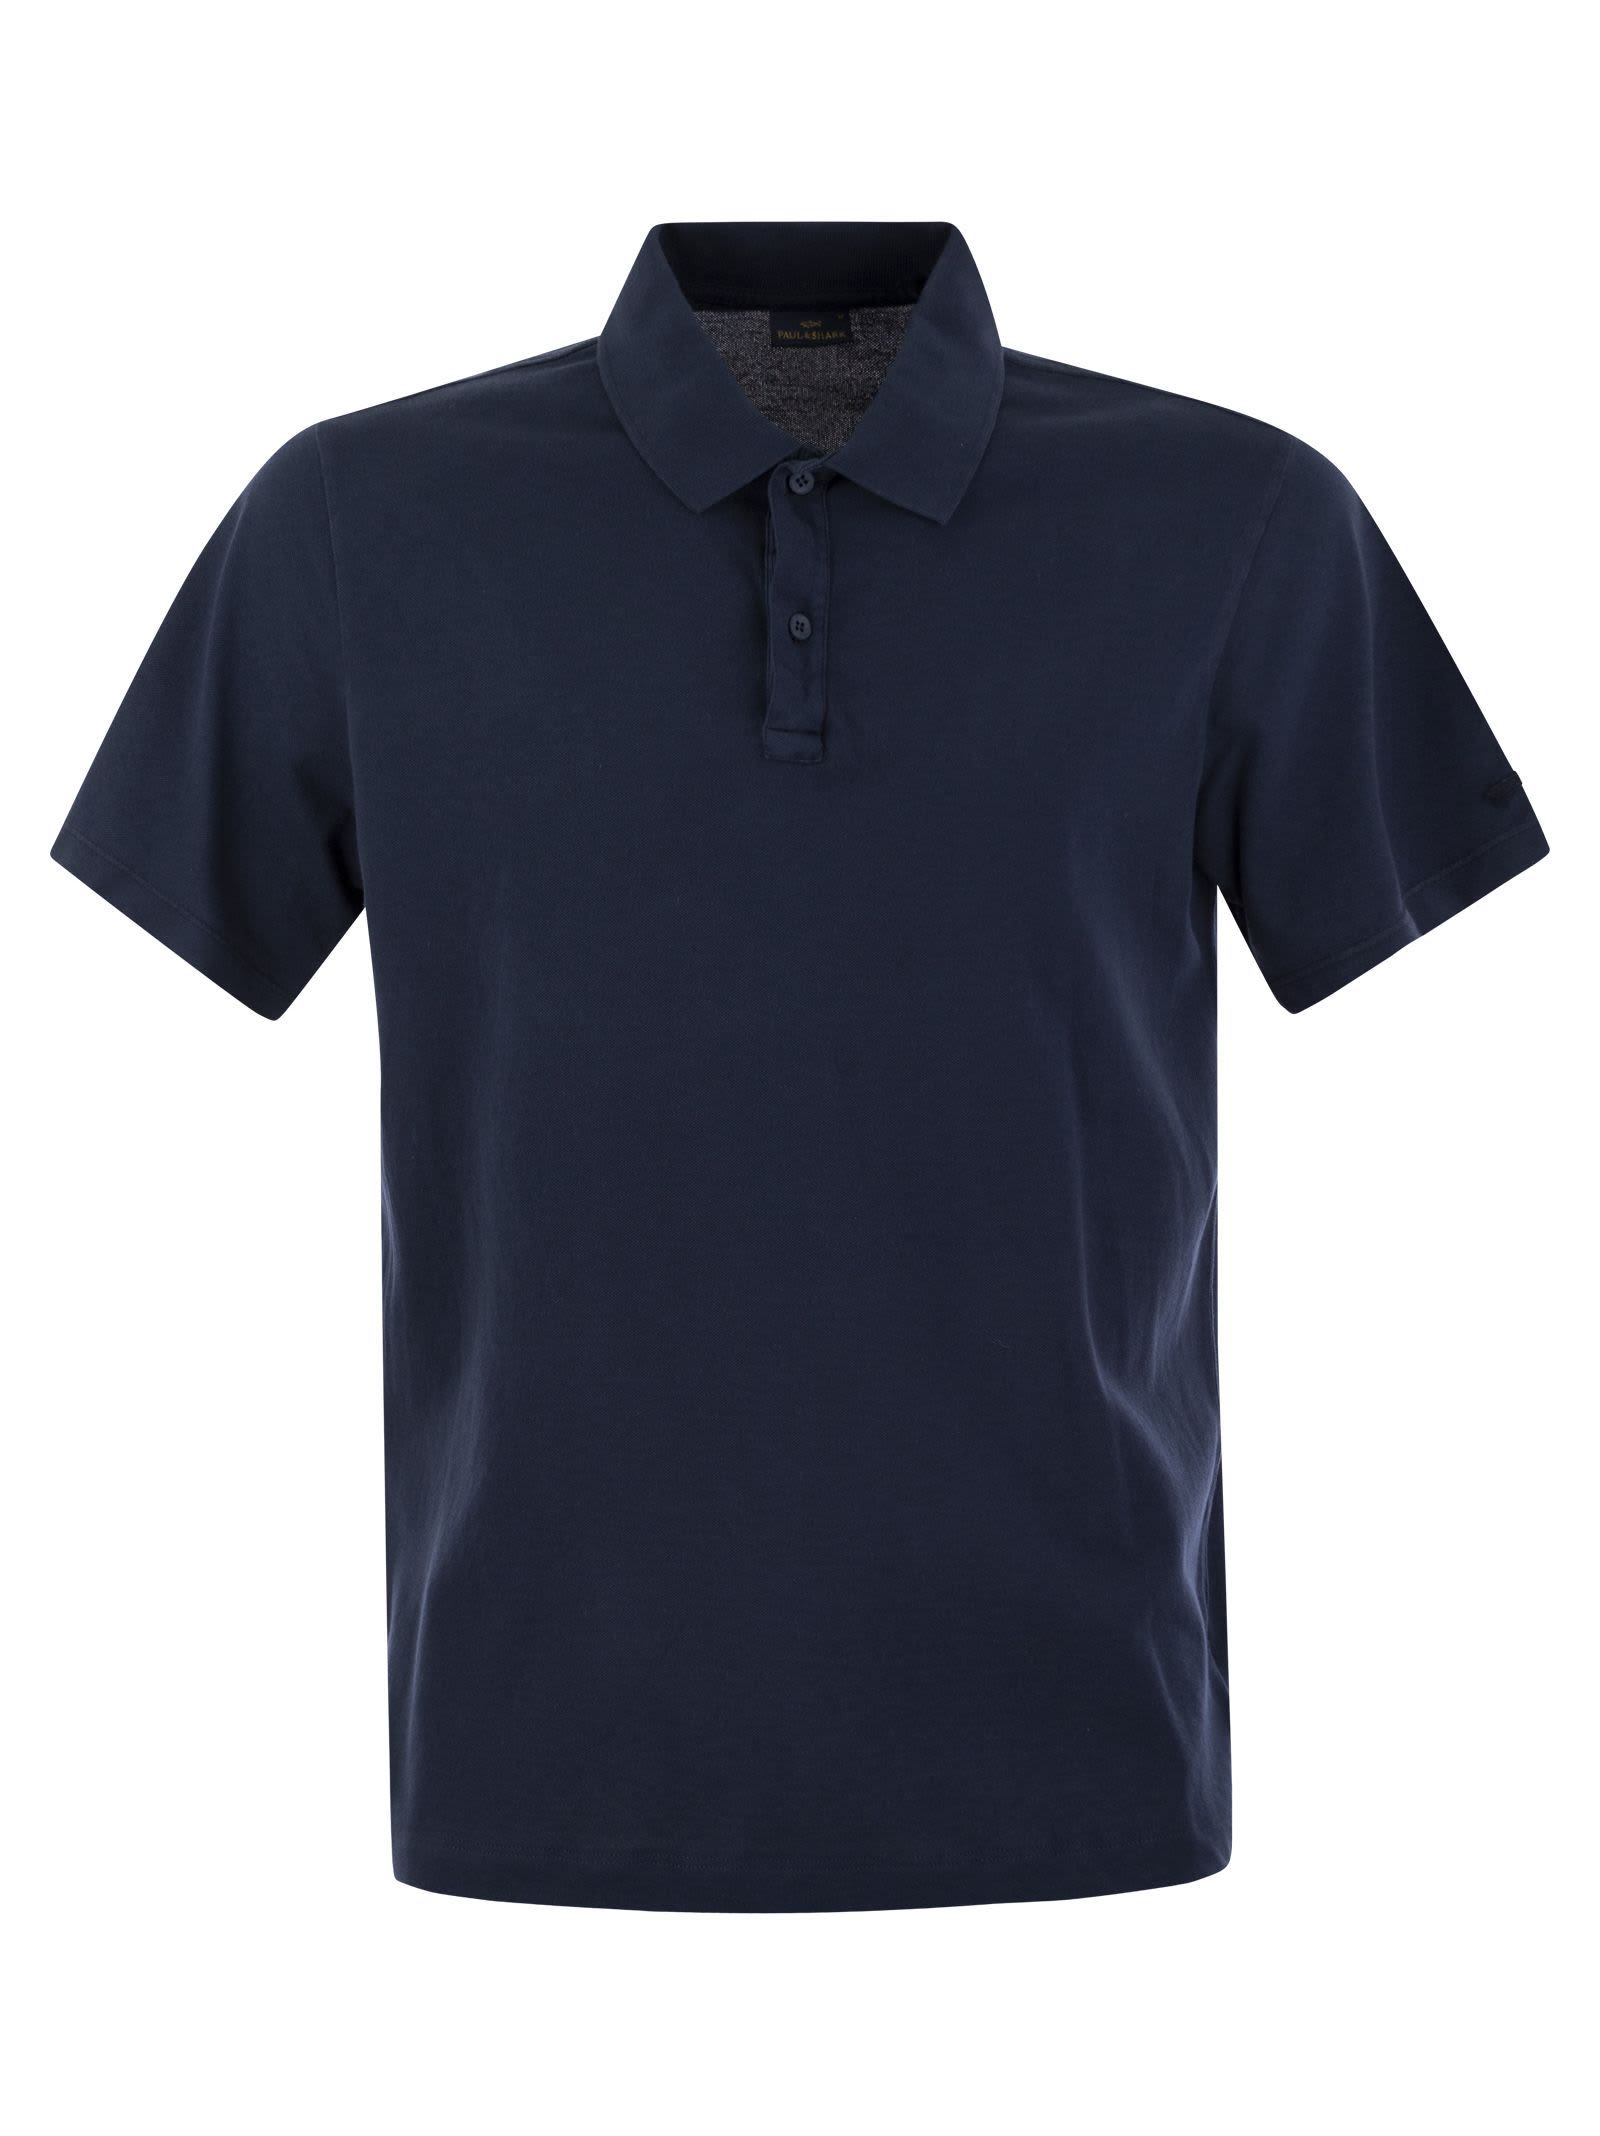 Paul&amp;shark Garment-dyed Pique Cotton Polo Shirt In Blue